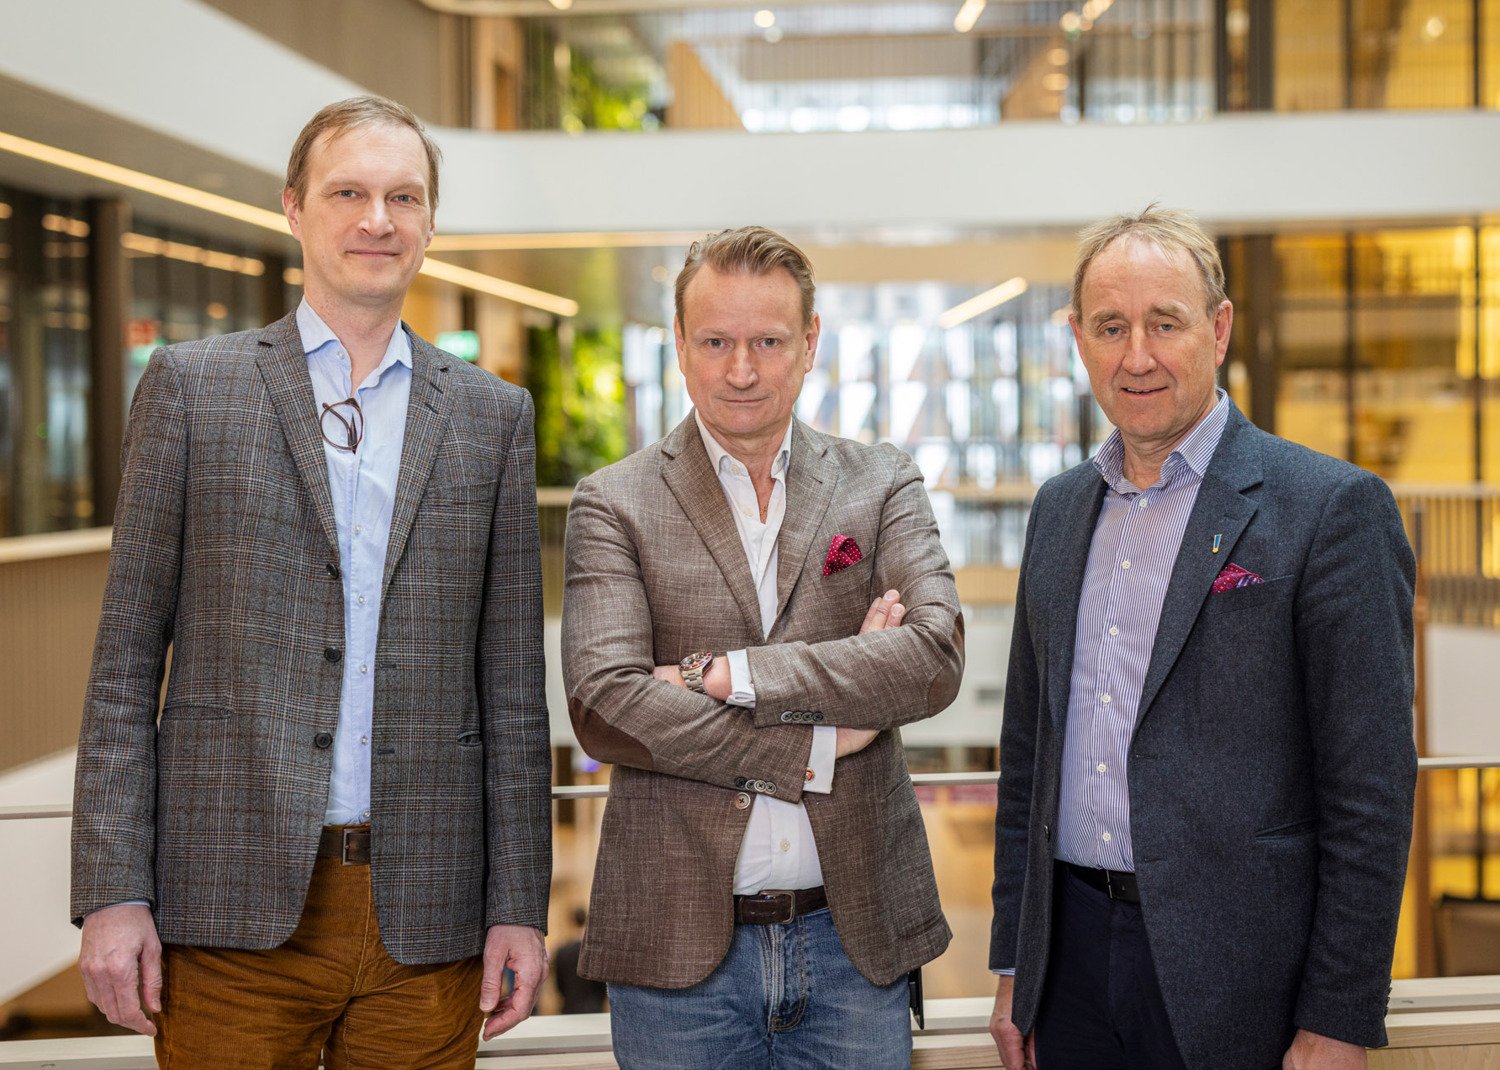 KI's dean Sten Linnarsson, Matti Sällberg and Carl-Johan Sundberg